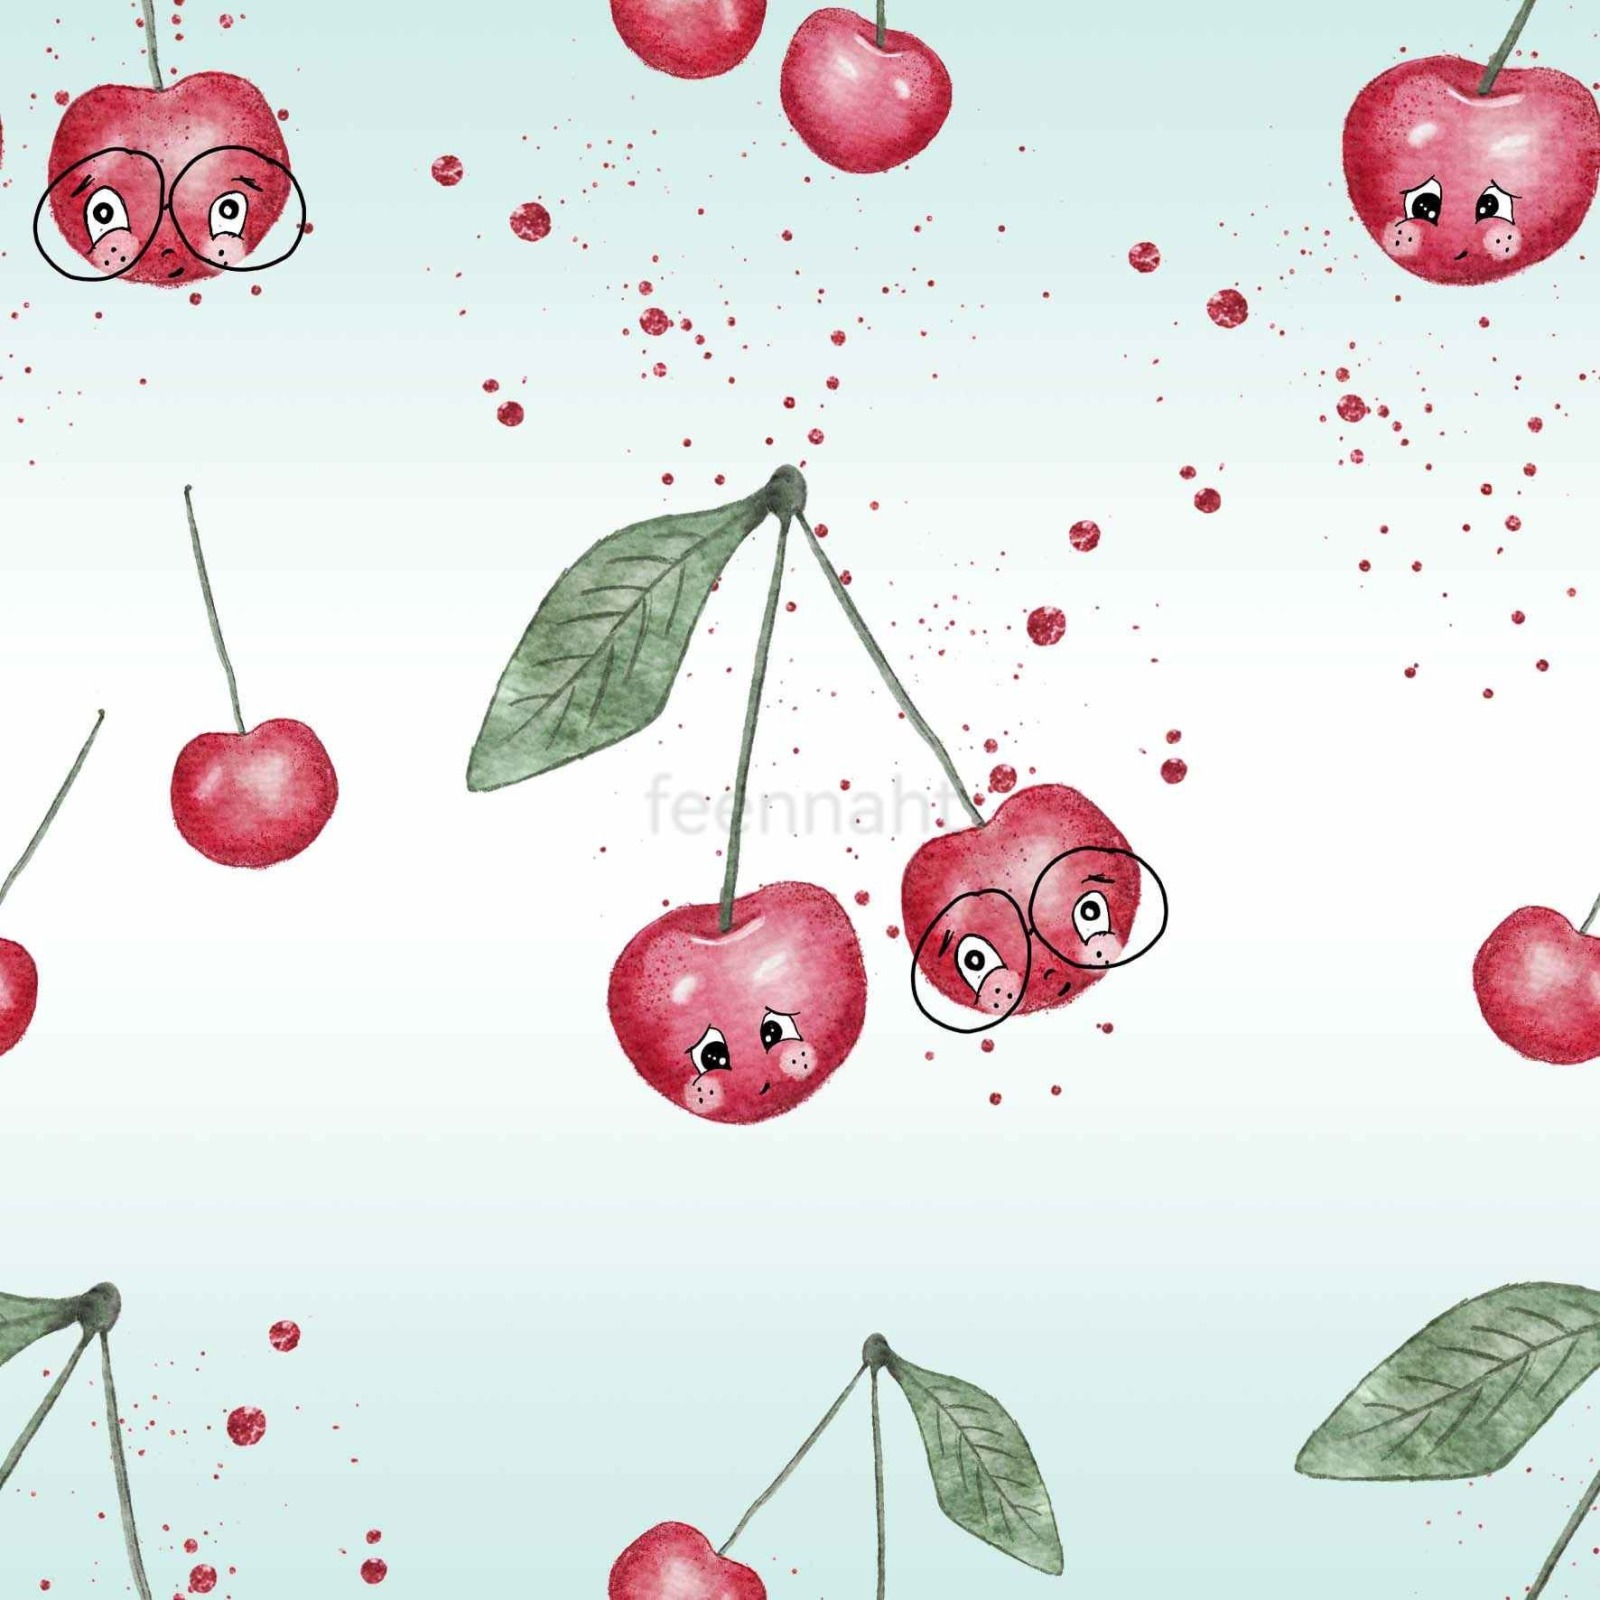 Vorbestellung - Baumwolle Webware / 19,90 EUR/m - Eigenproduktion sweet cherrys mint - -